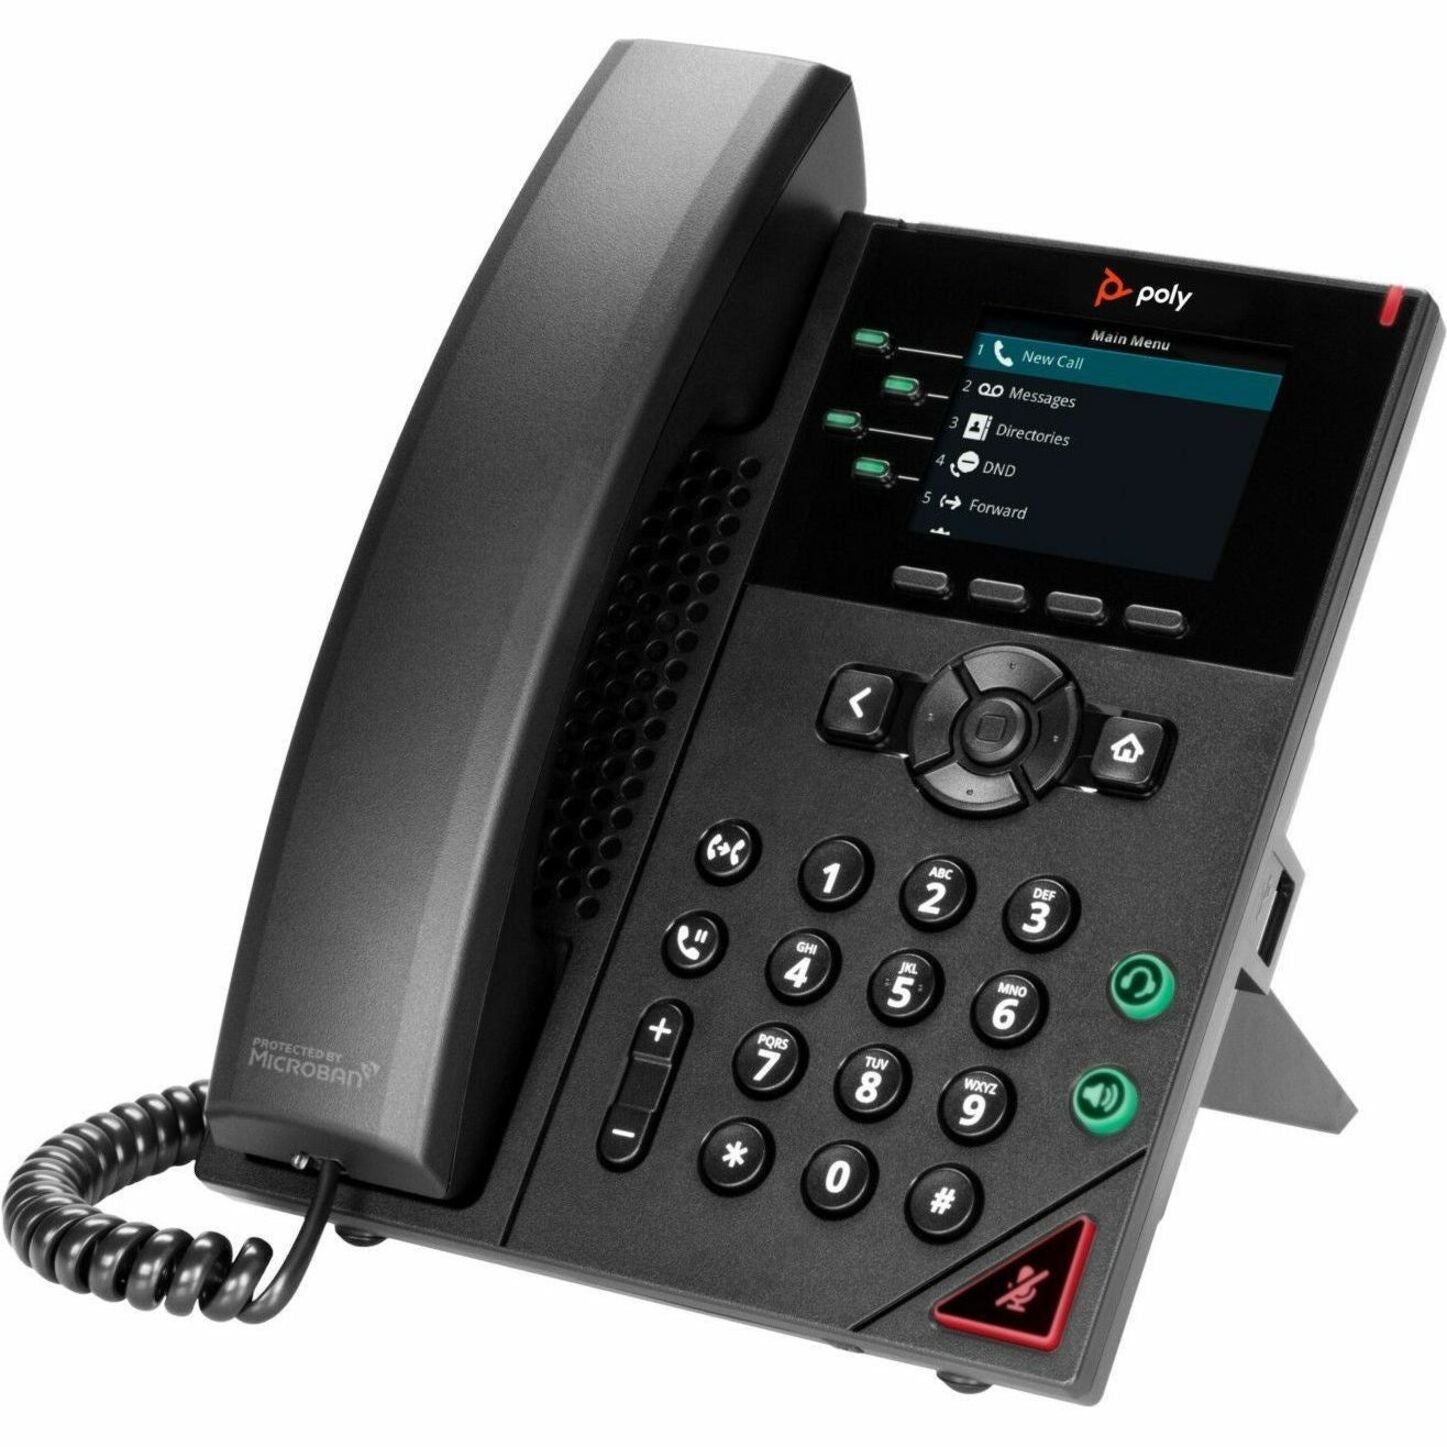 Poly HP (89B64AA) IP Phones